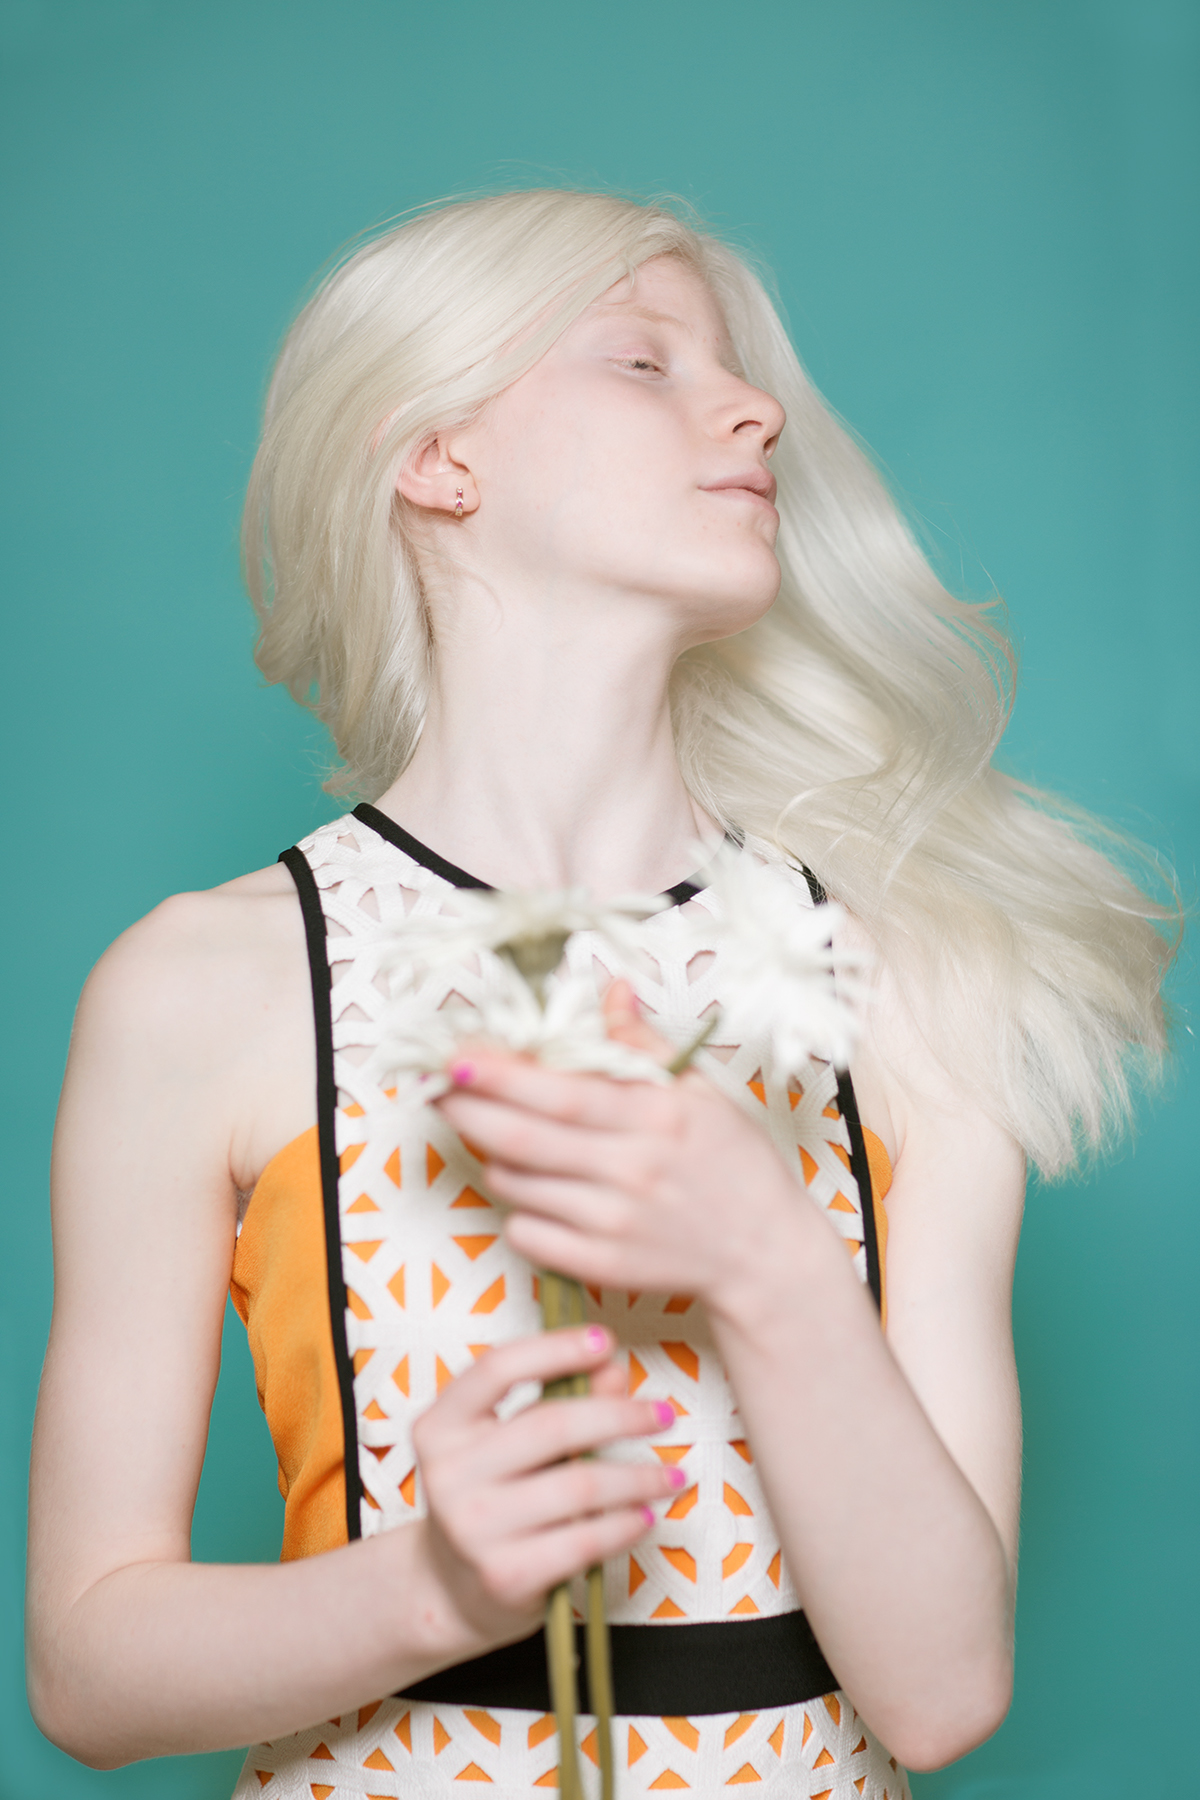 Edvina Meta Genti Minga albino MSGM editorial fashion editorial